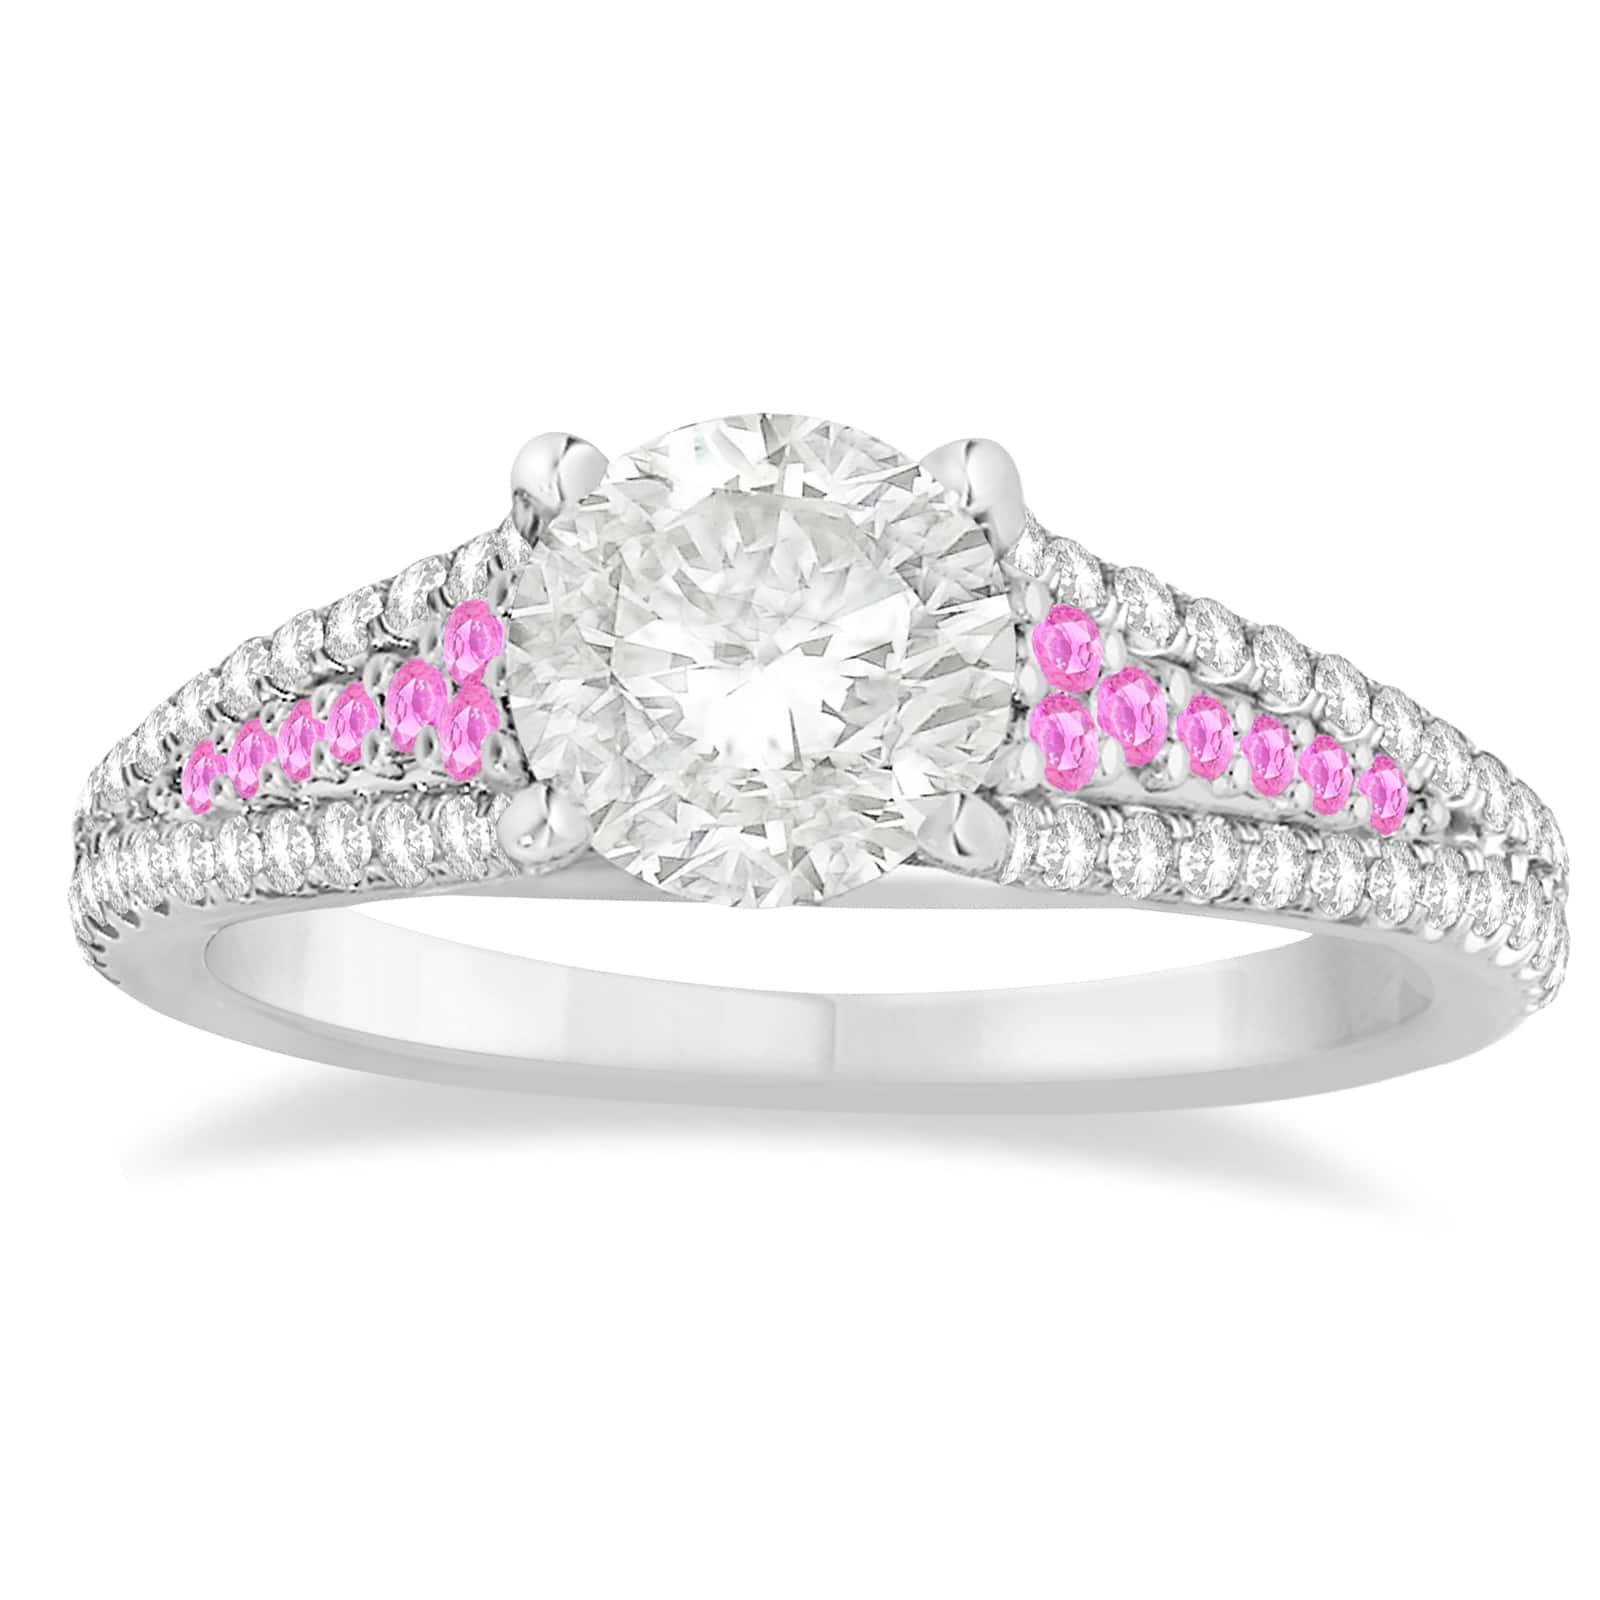 Pink Sapphire & Diamond Engagement Ring 18k White Gold (0.33ct)